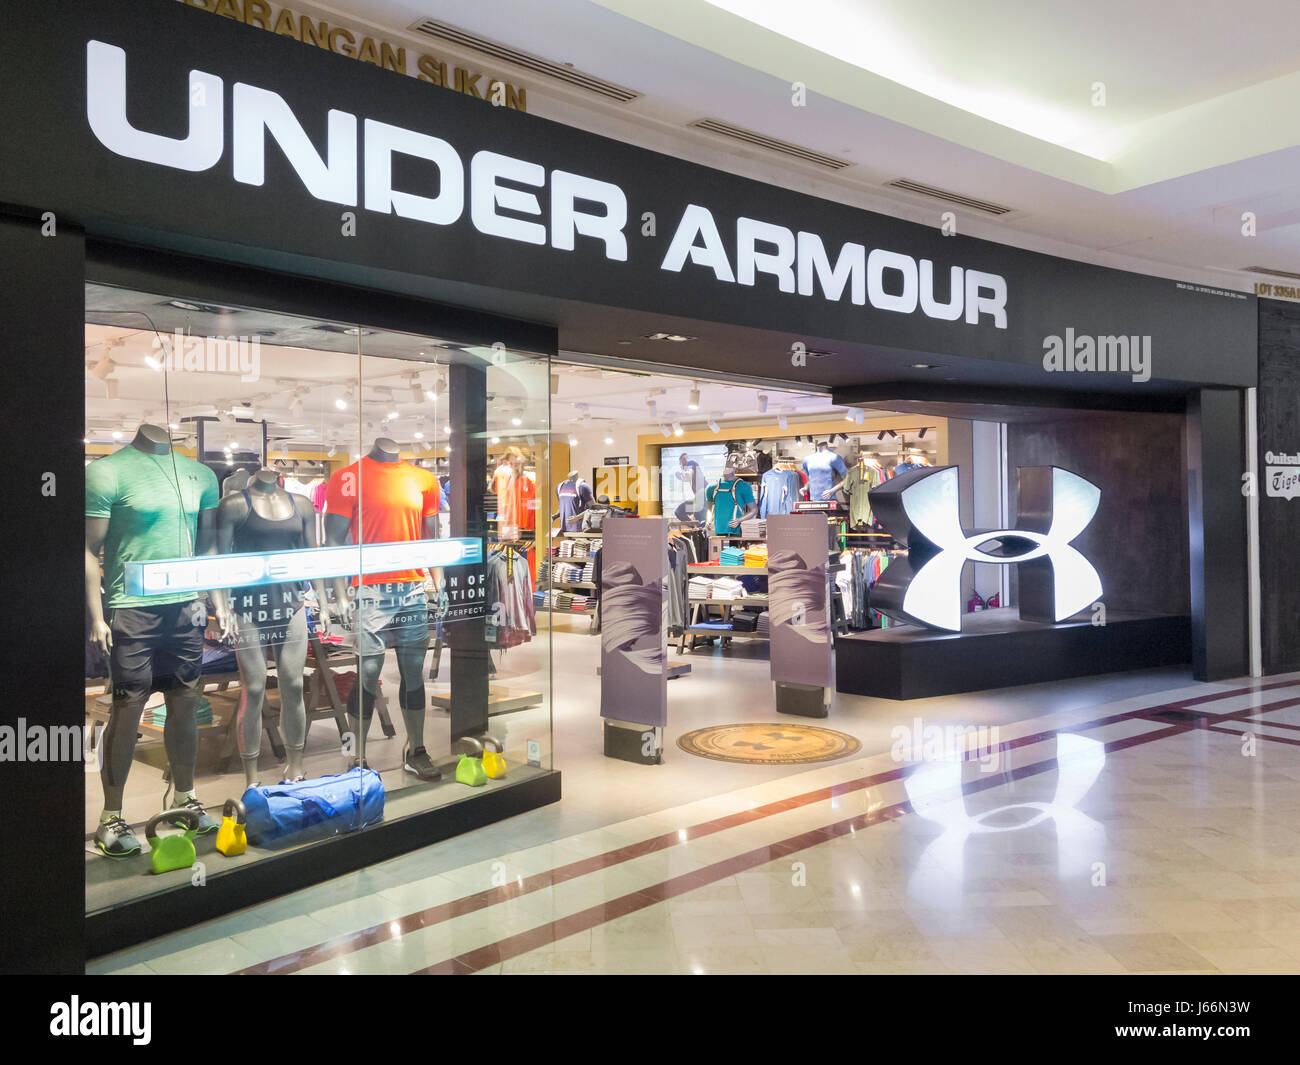 Under armour shop, Malaysia Stock Photo - Alamy